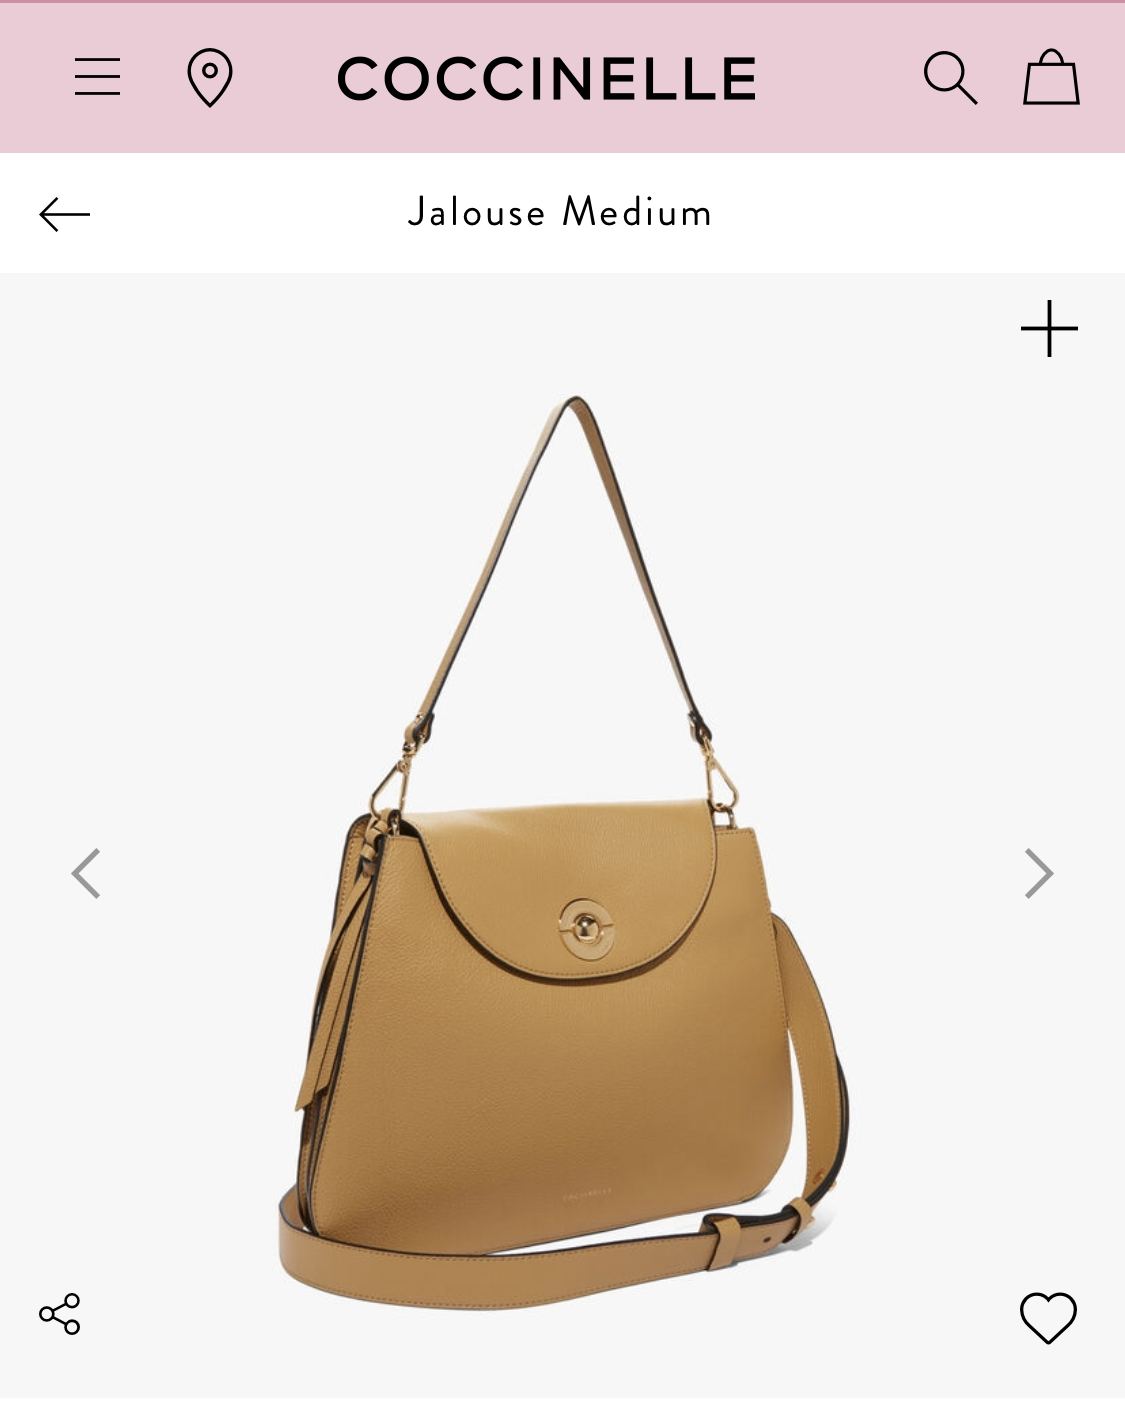 Coccinelle Jalouse Medium handbag